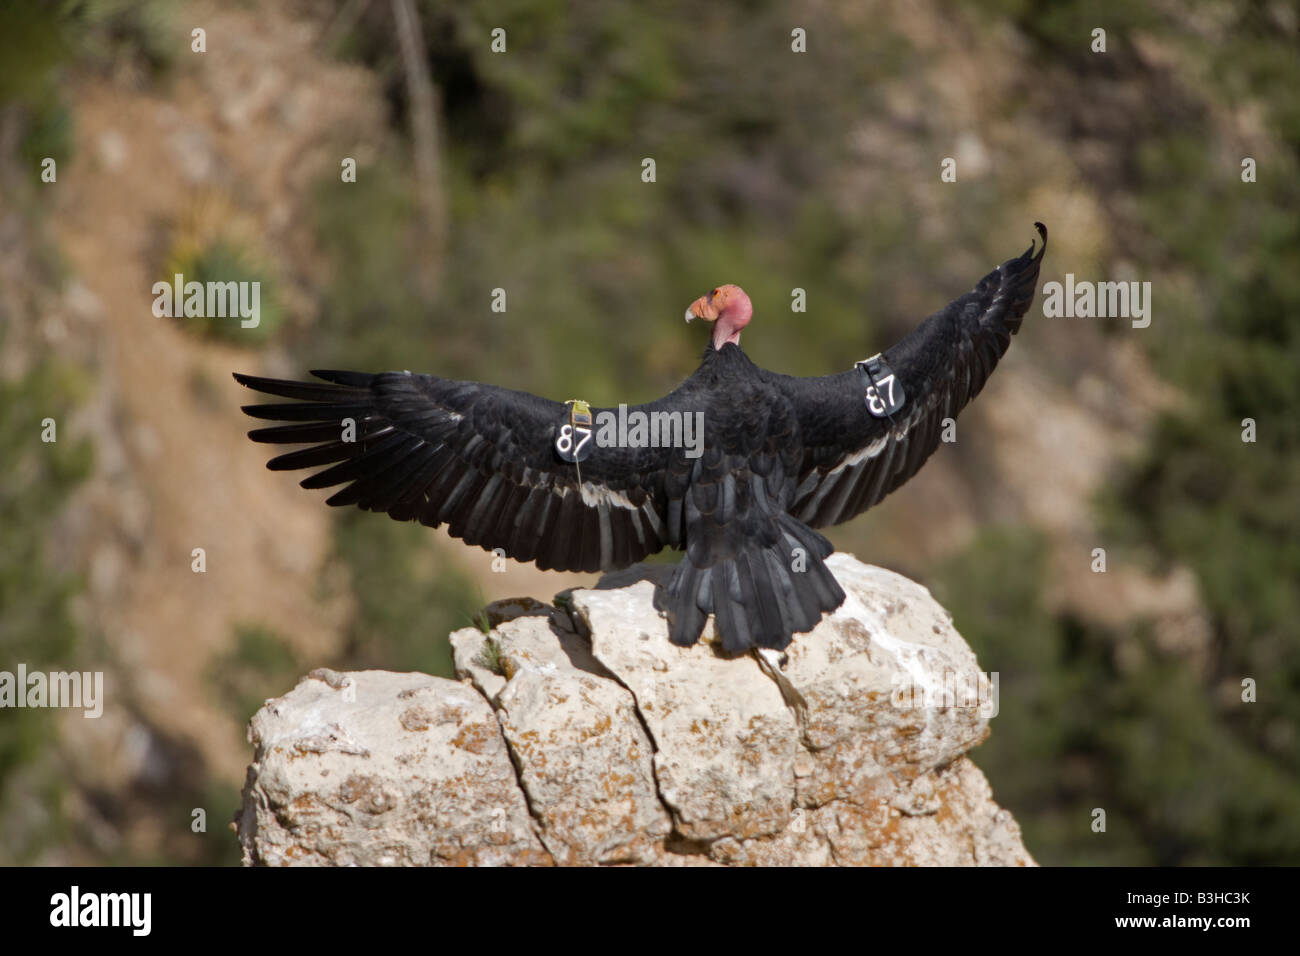 California Condor (Gymnogyps californianus) Sunning on rock - Arizona - USA - Endangered species Stock Photo